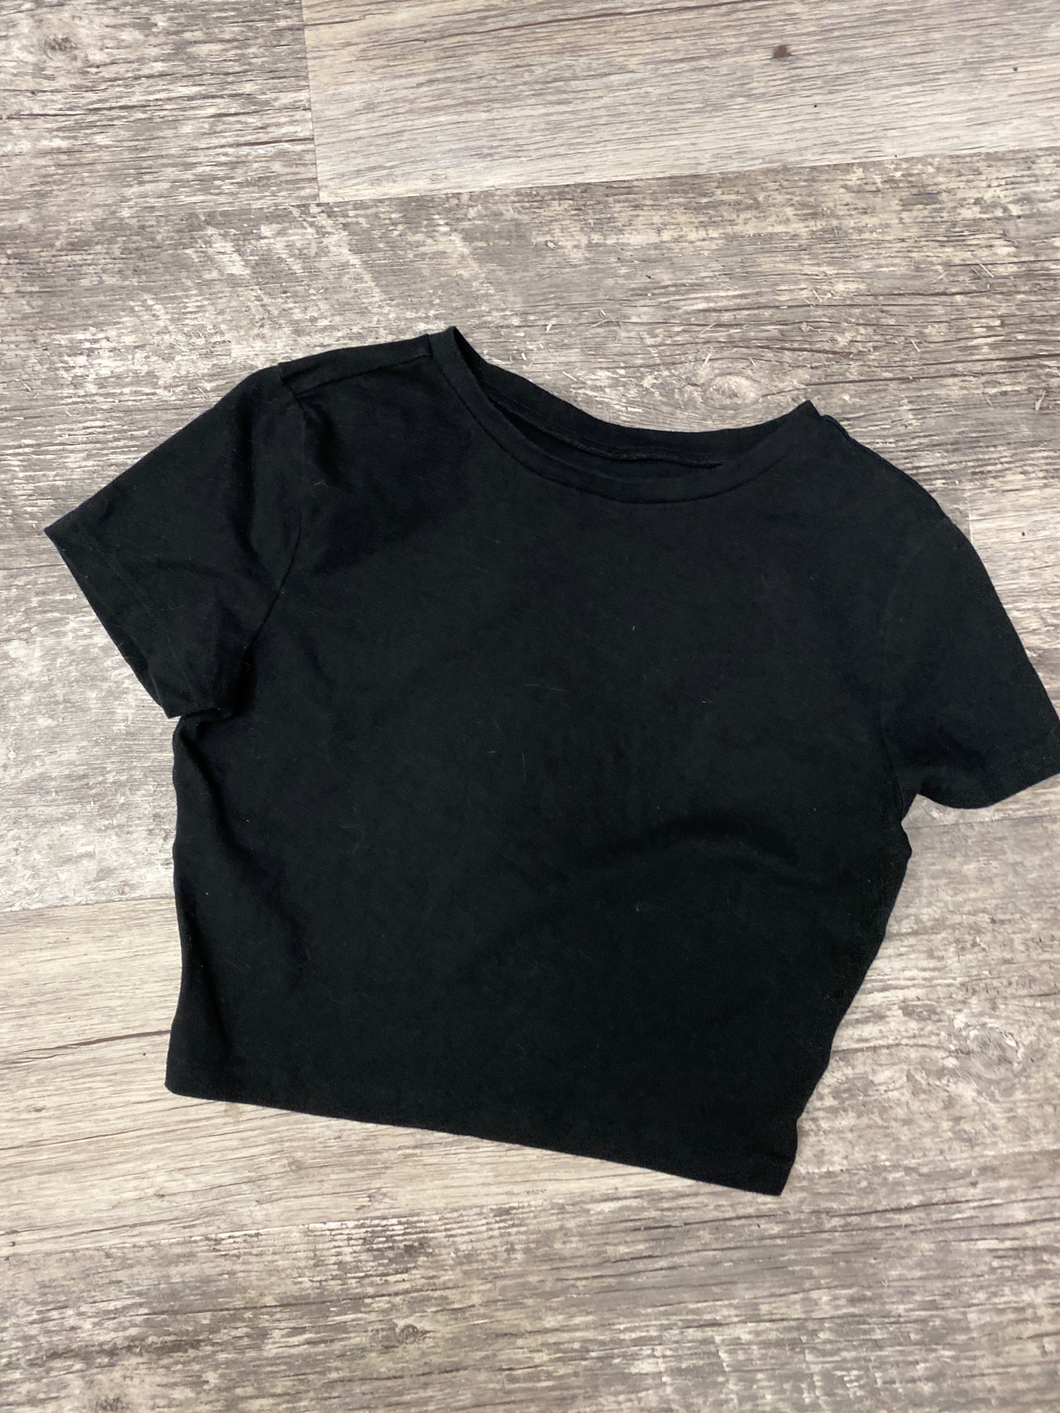 Wild Fable T-Shirt Size Medium